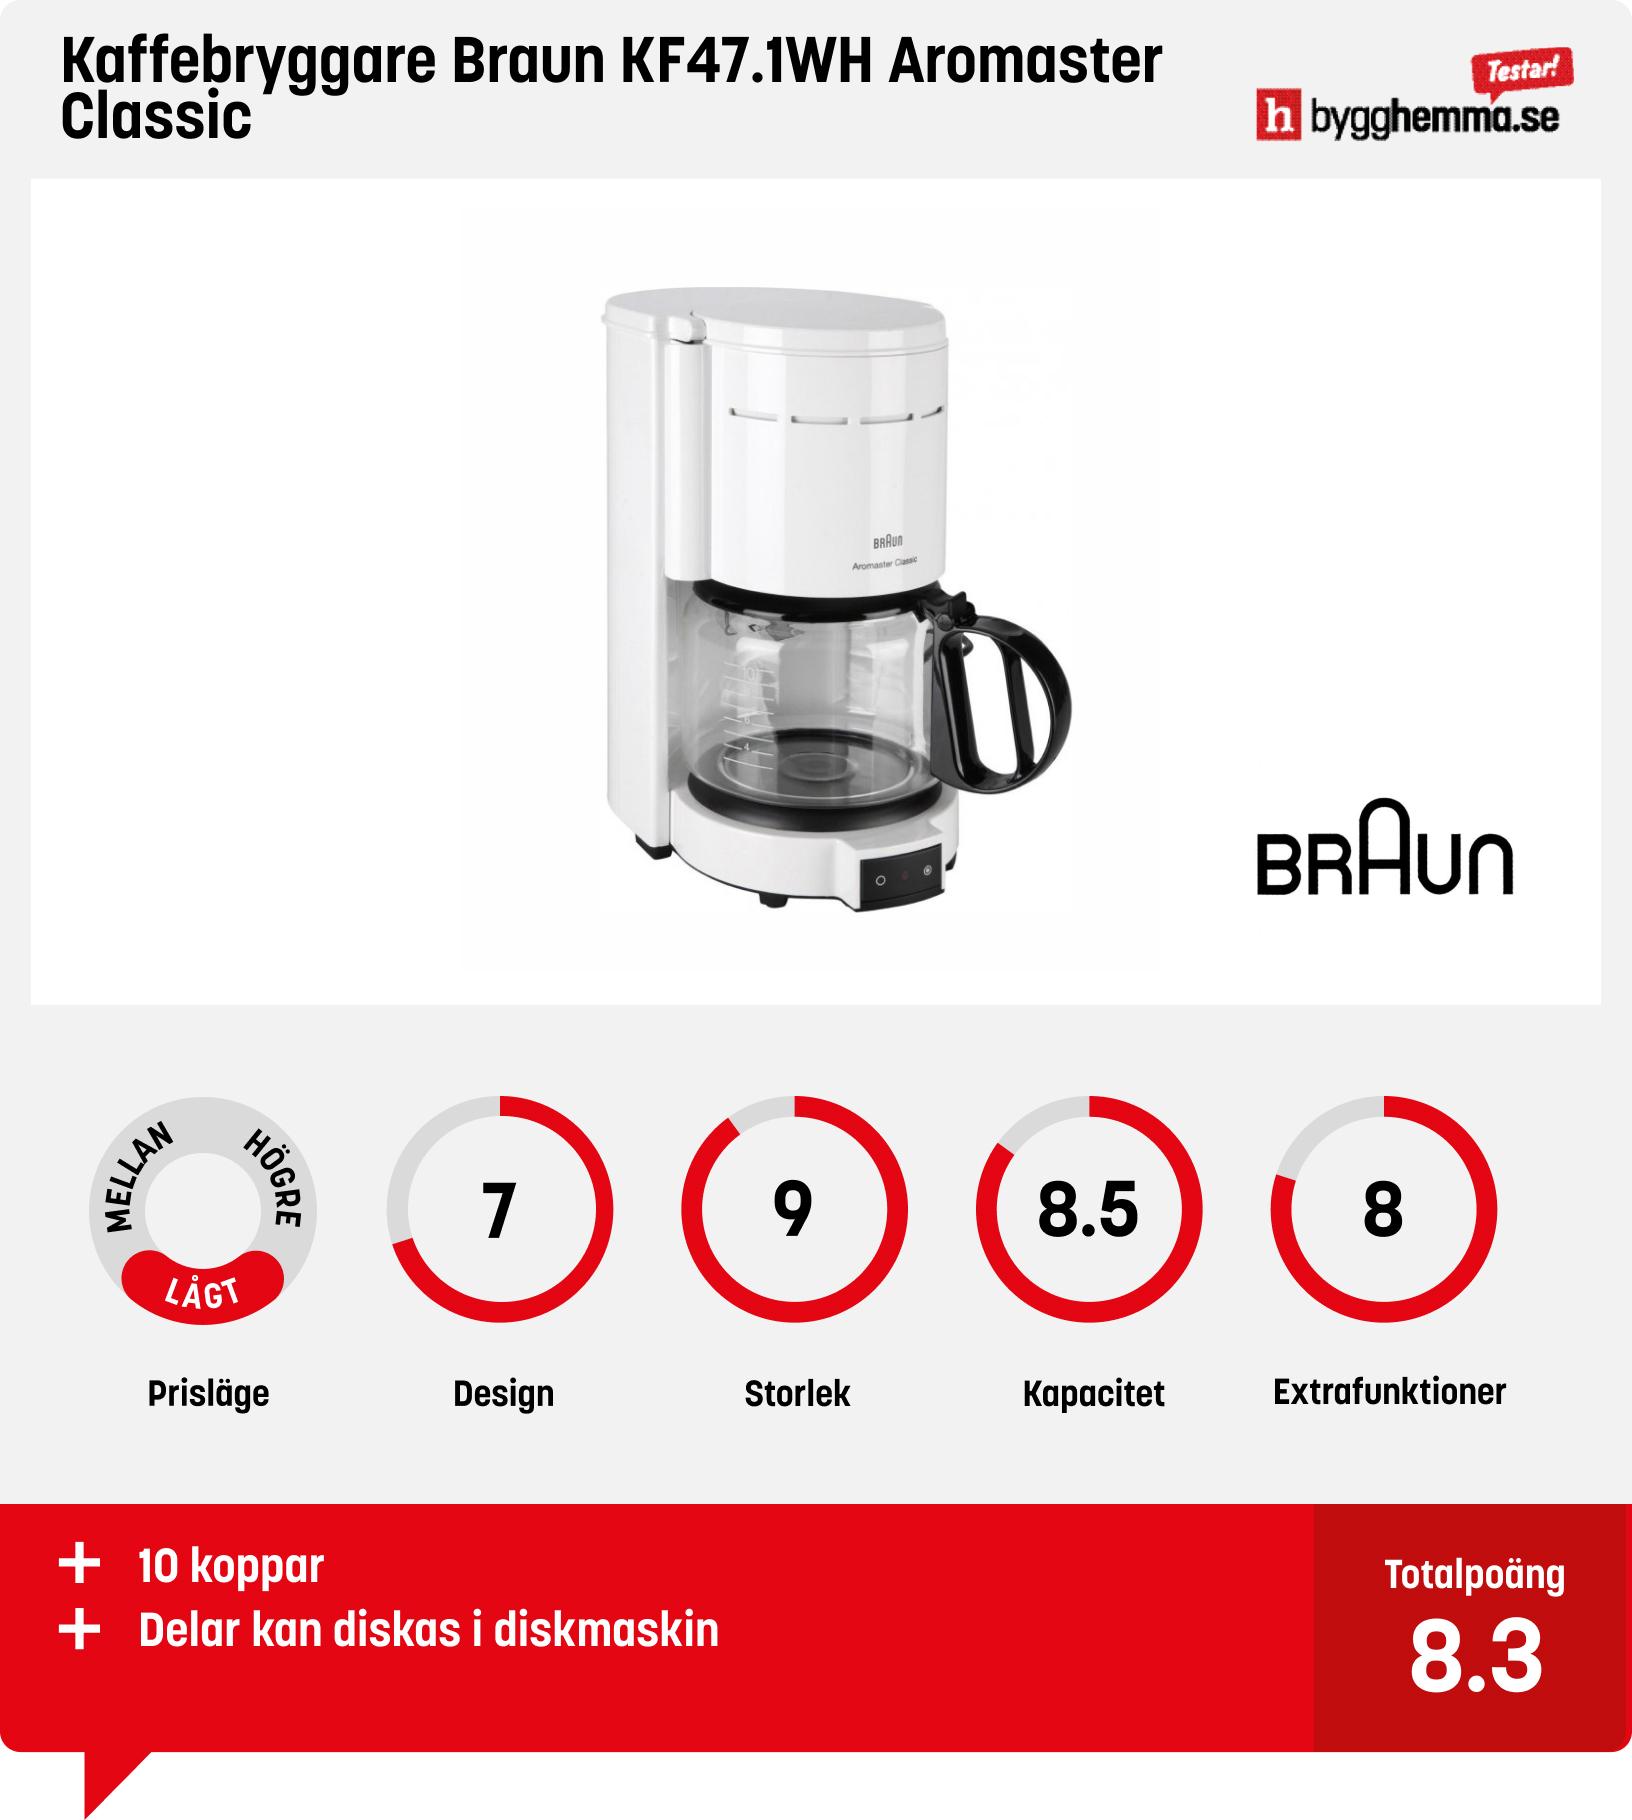 Liten kaffebryggare bäst i test - Kaffebryggare Braun KF47.1WH Aromaster Classic